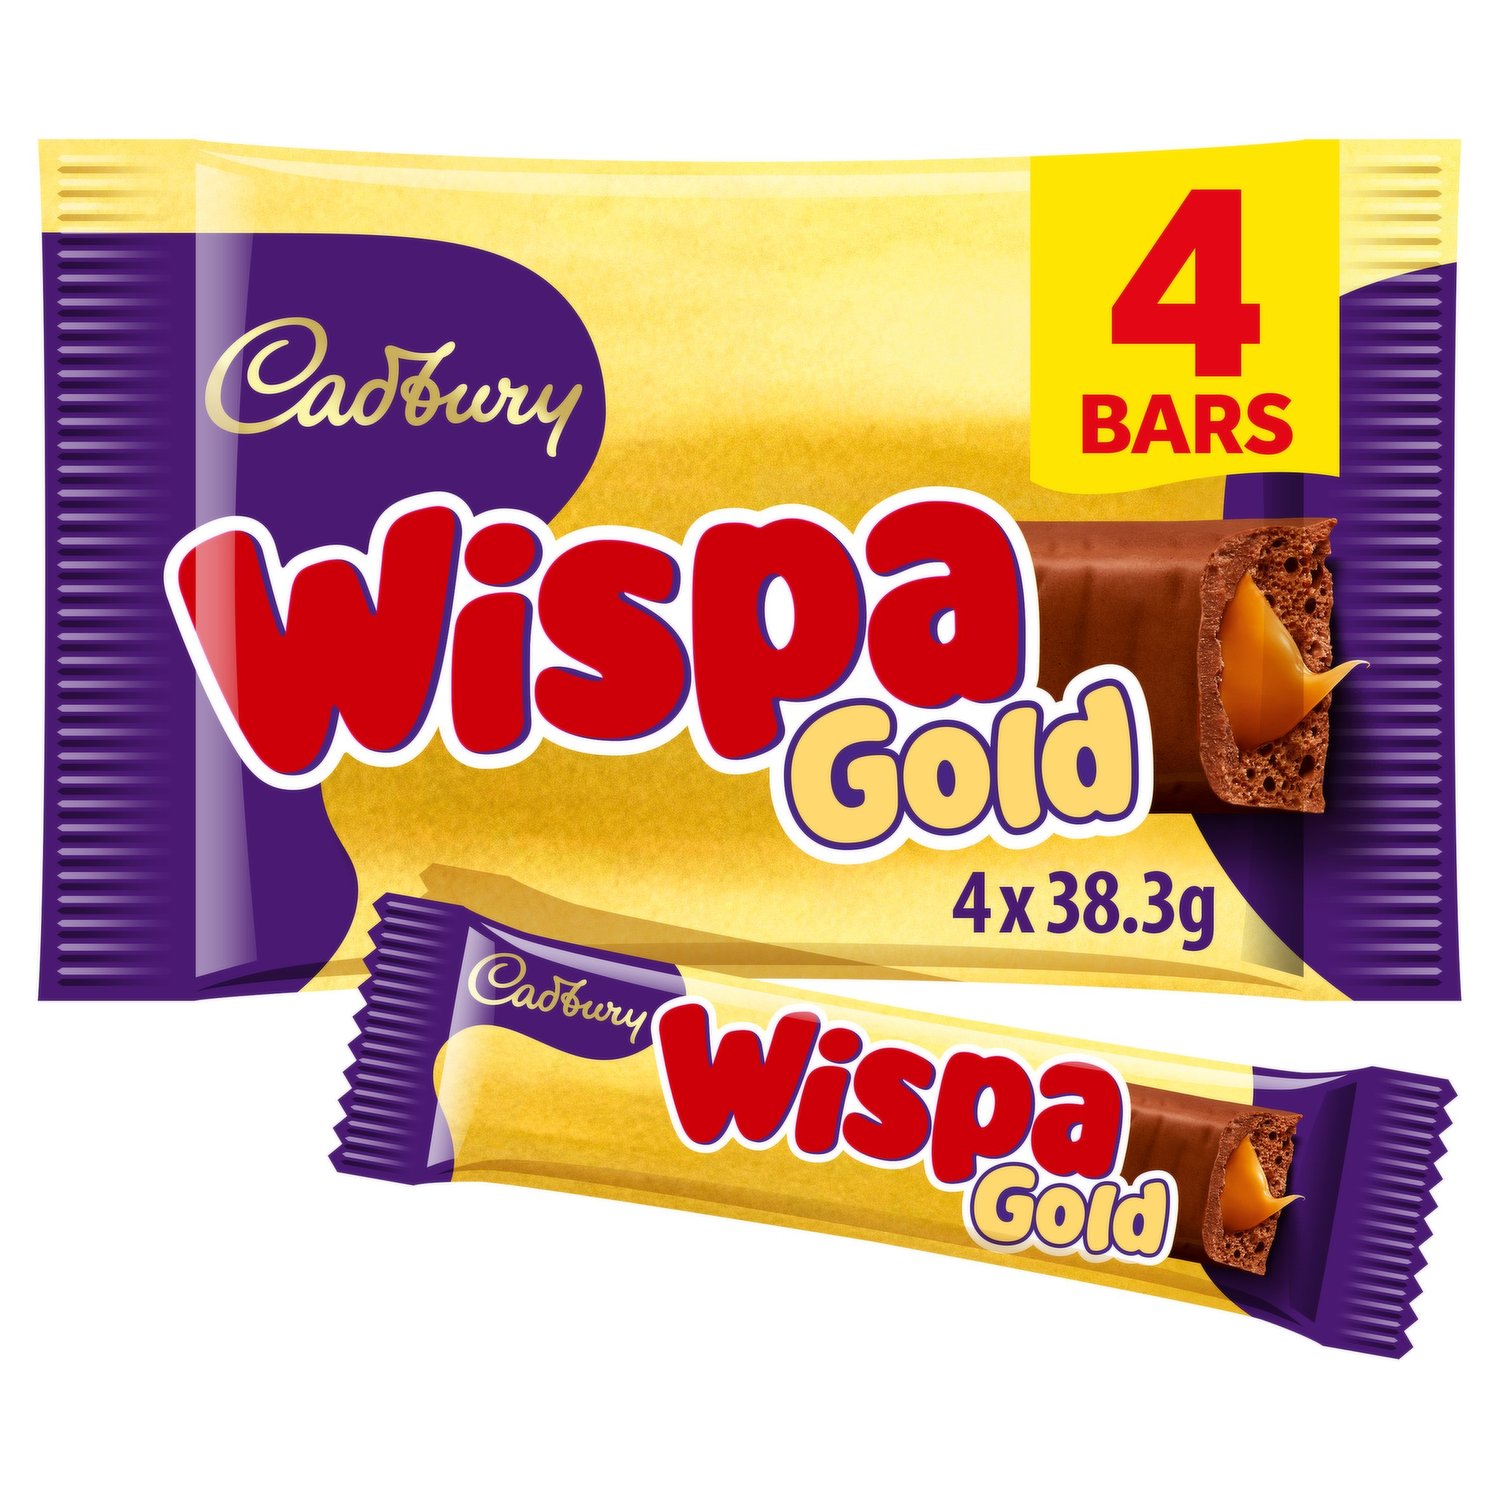 Cadbury Wispa Gold Total 12 Bars of